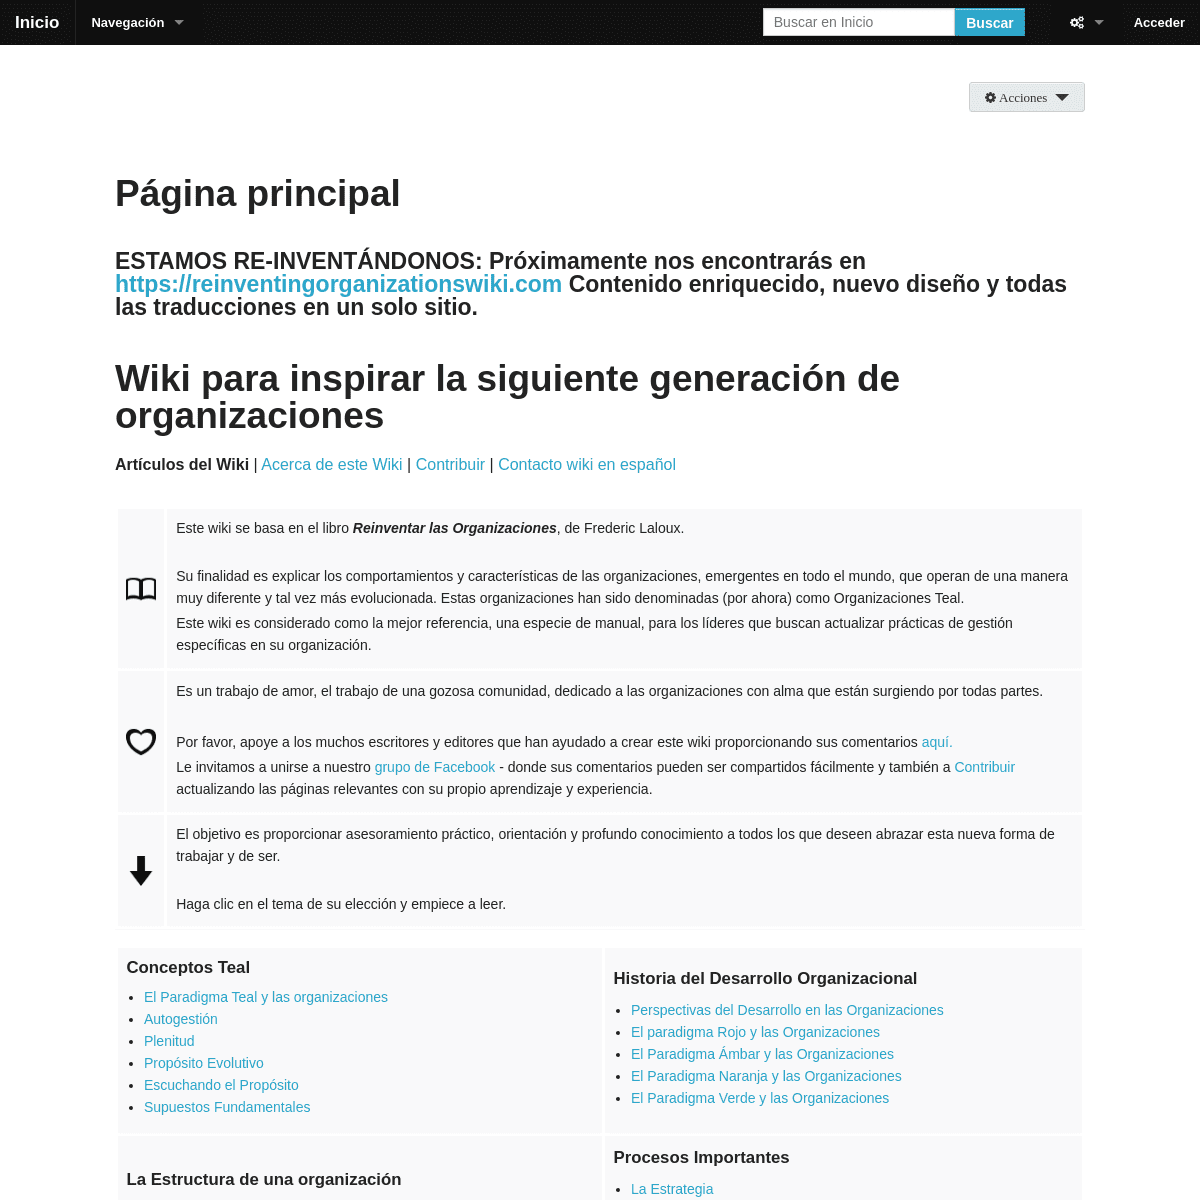 A complete backup of https://reinventarlasorganizacioneswiki.com